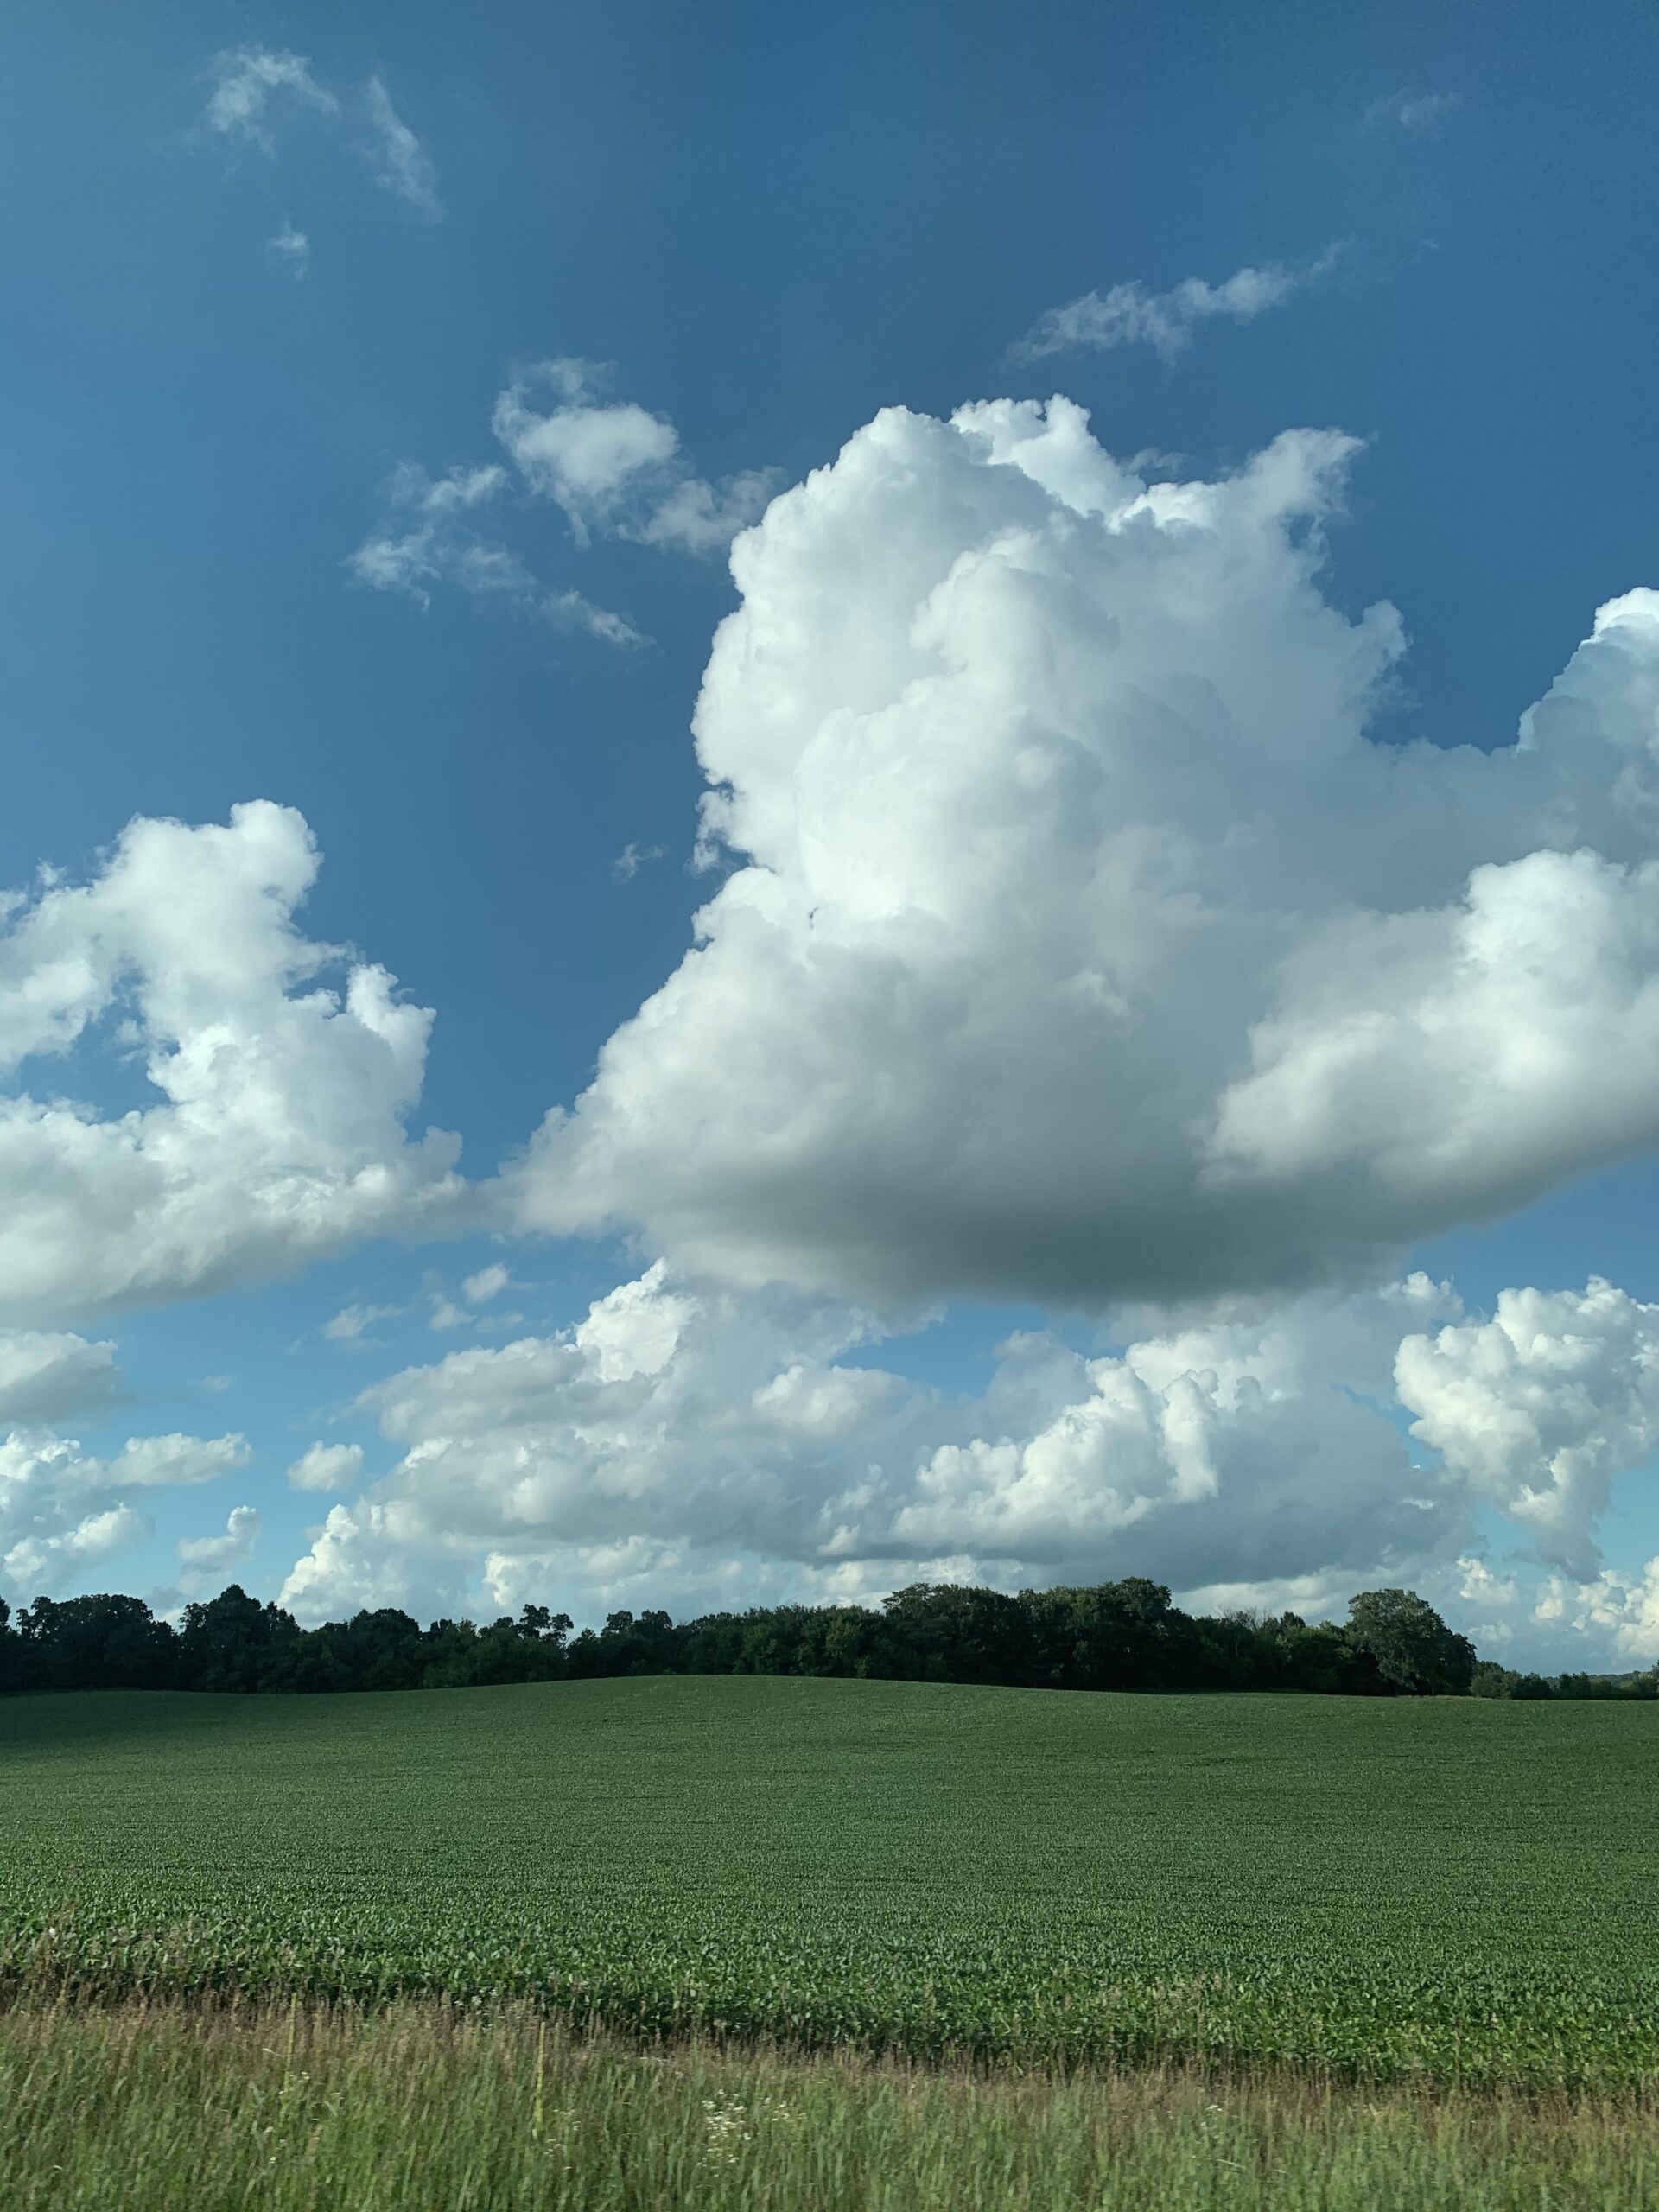 clouds-over-fields-blue-sky